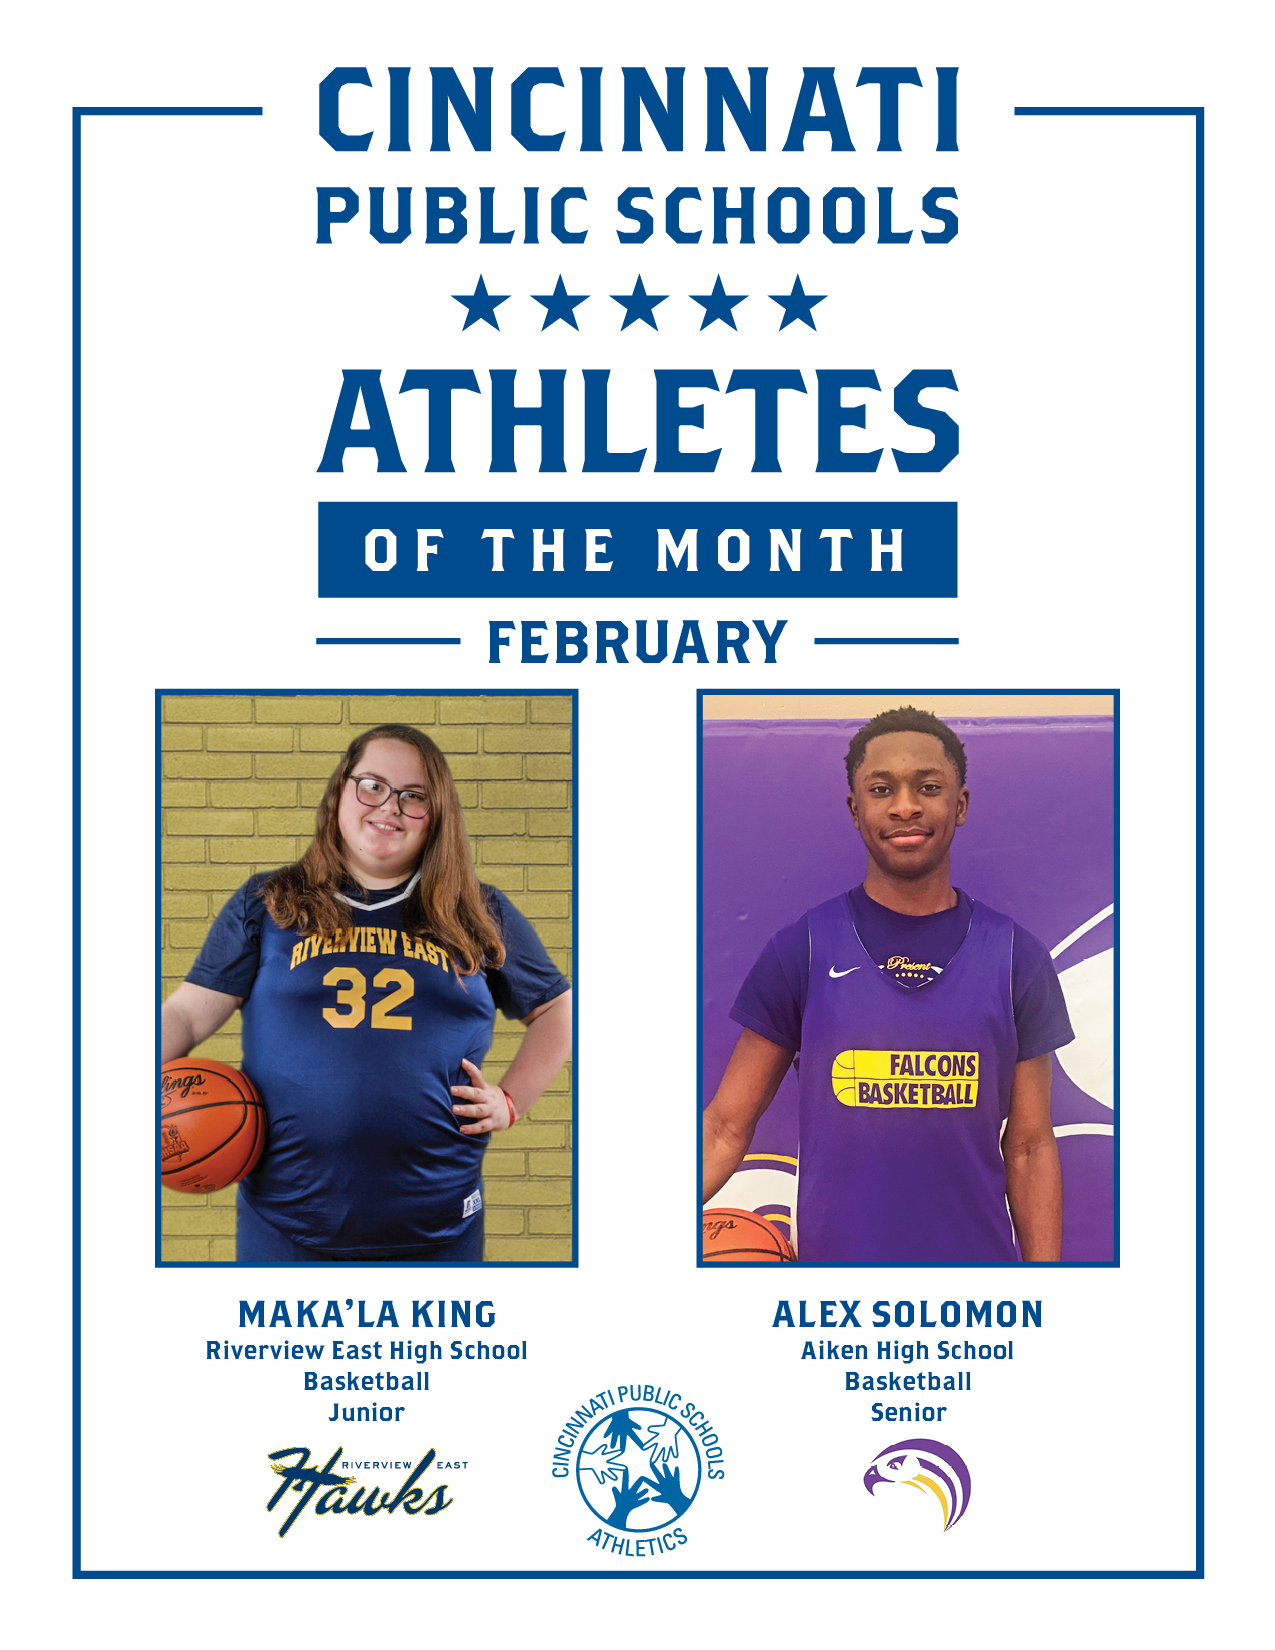 Cincinnati Public Schools Athletes of the Month for February